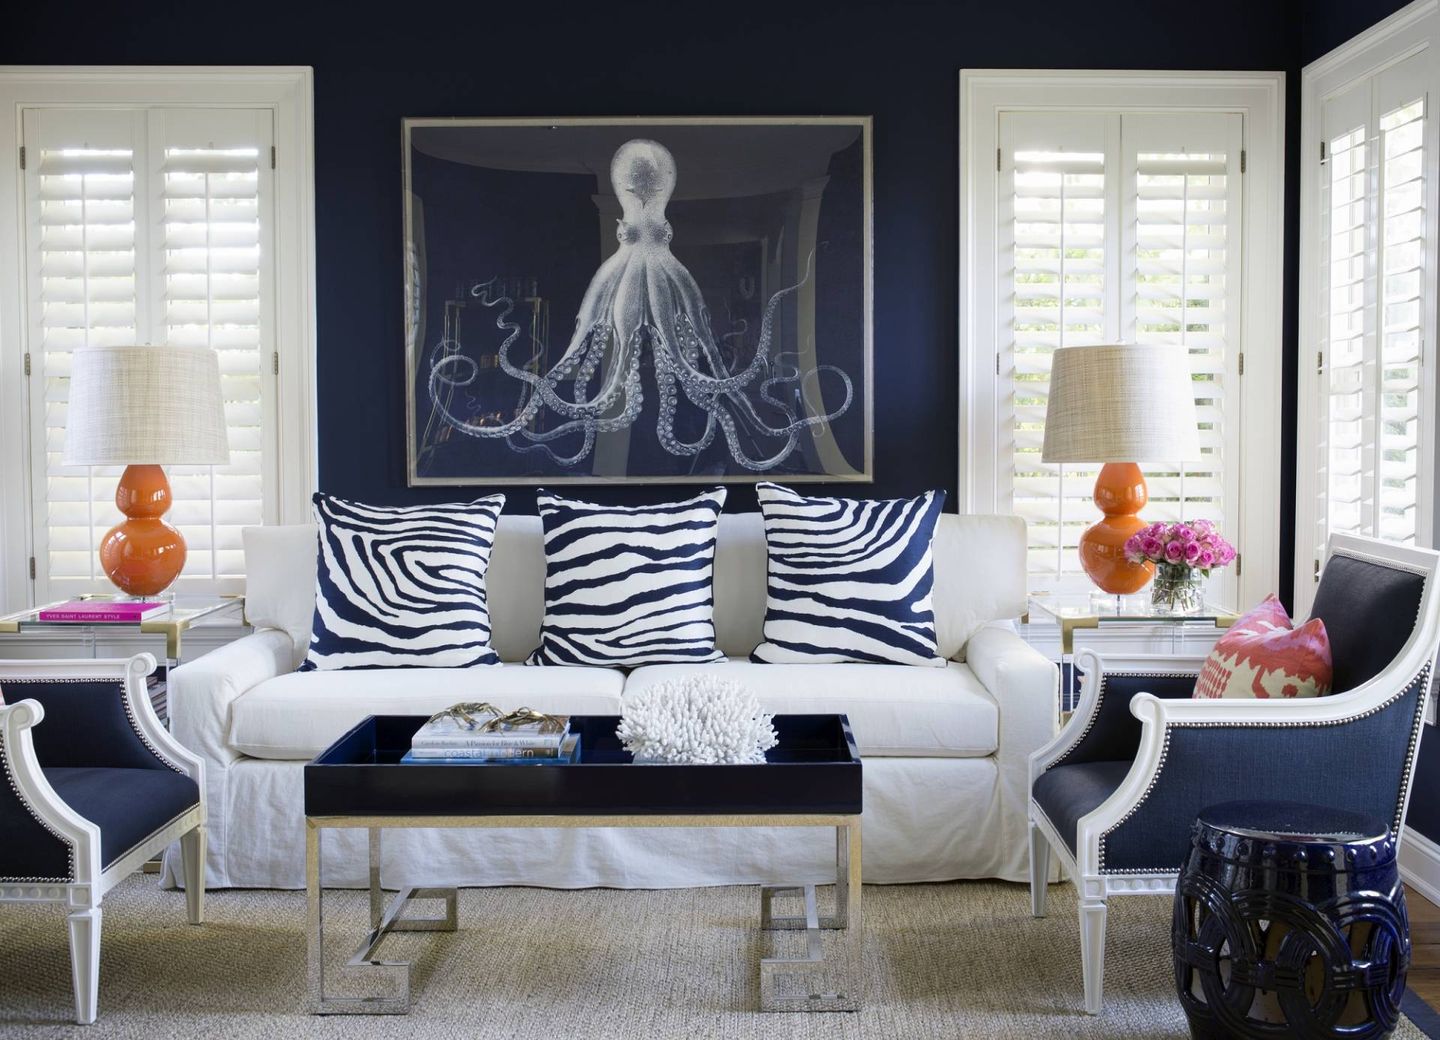 Pengaplikasian kombinasi cat tembok 2 warna navy blue dan putih membuat ruang tamu menjadi fresh dan natural.